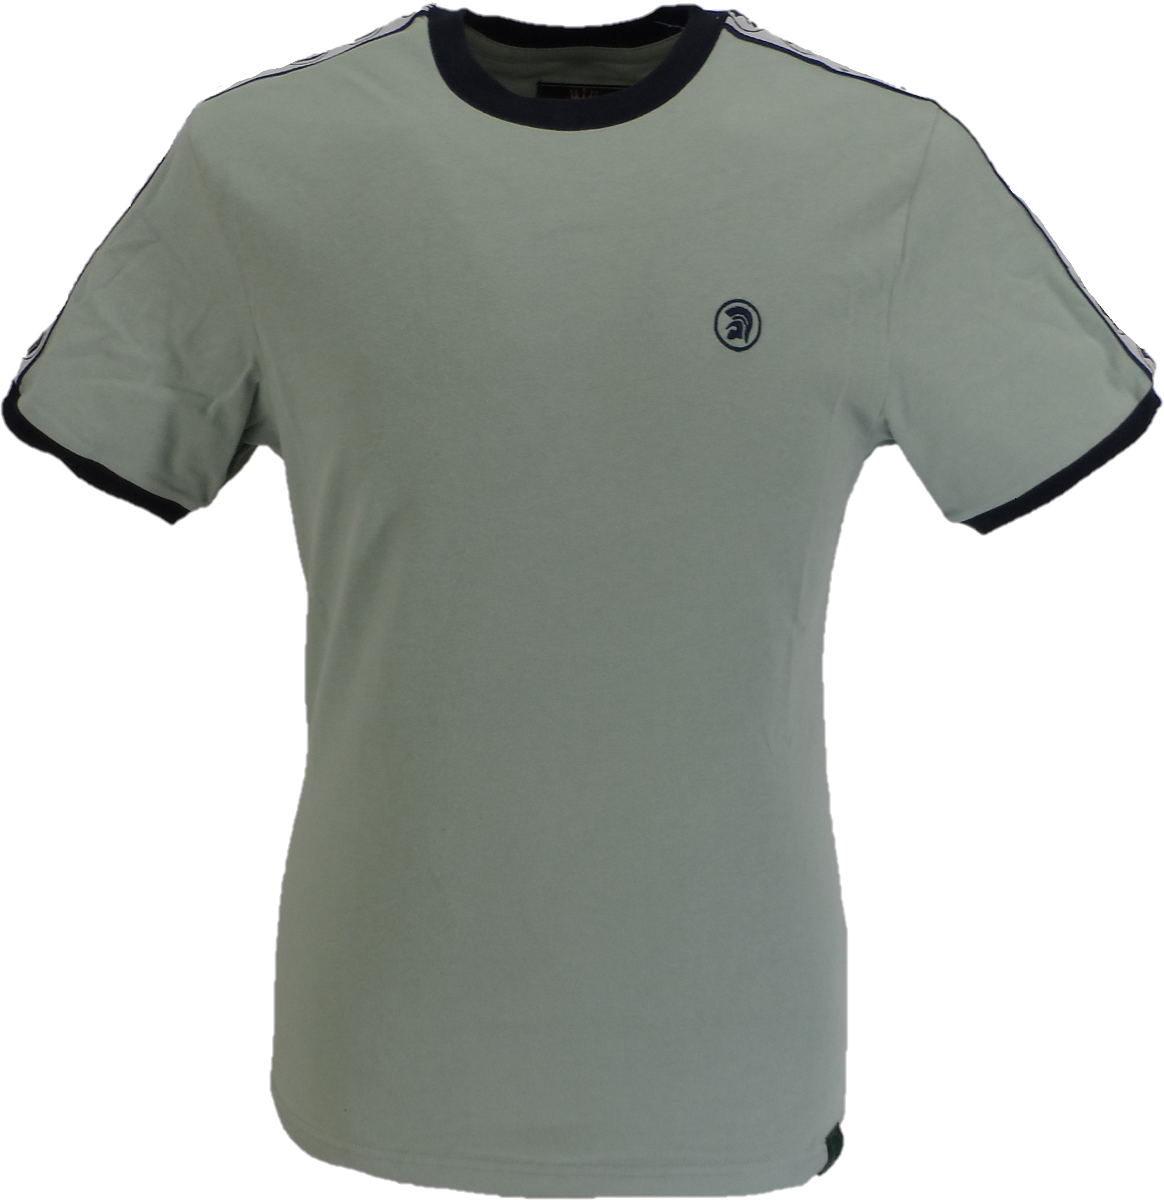 Trojan Records Mens Sage Green Taped Sleeve Cotton Ringer T-Shirt